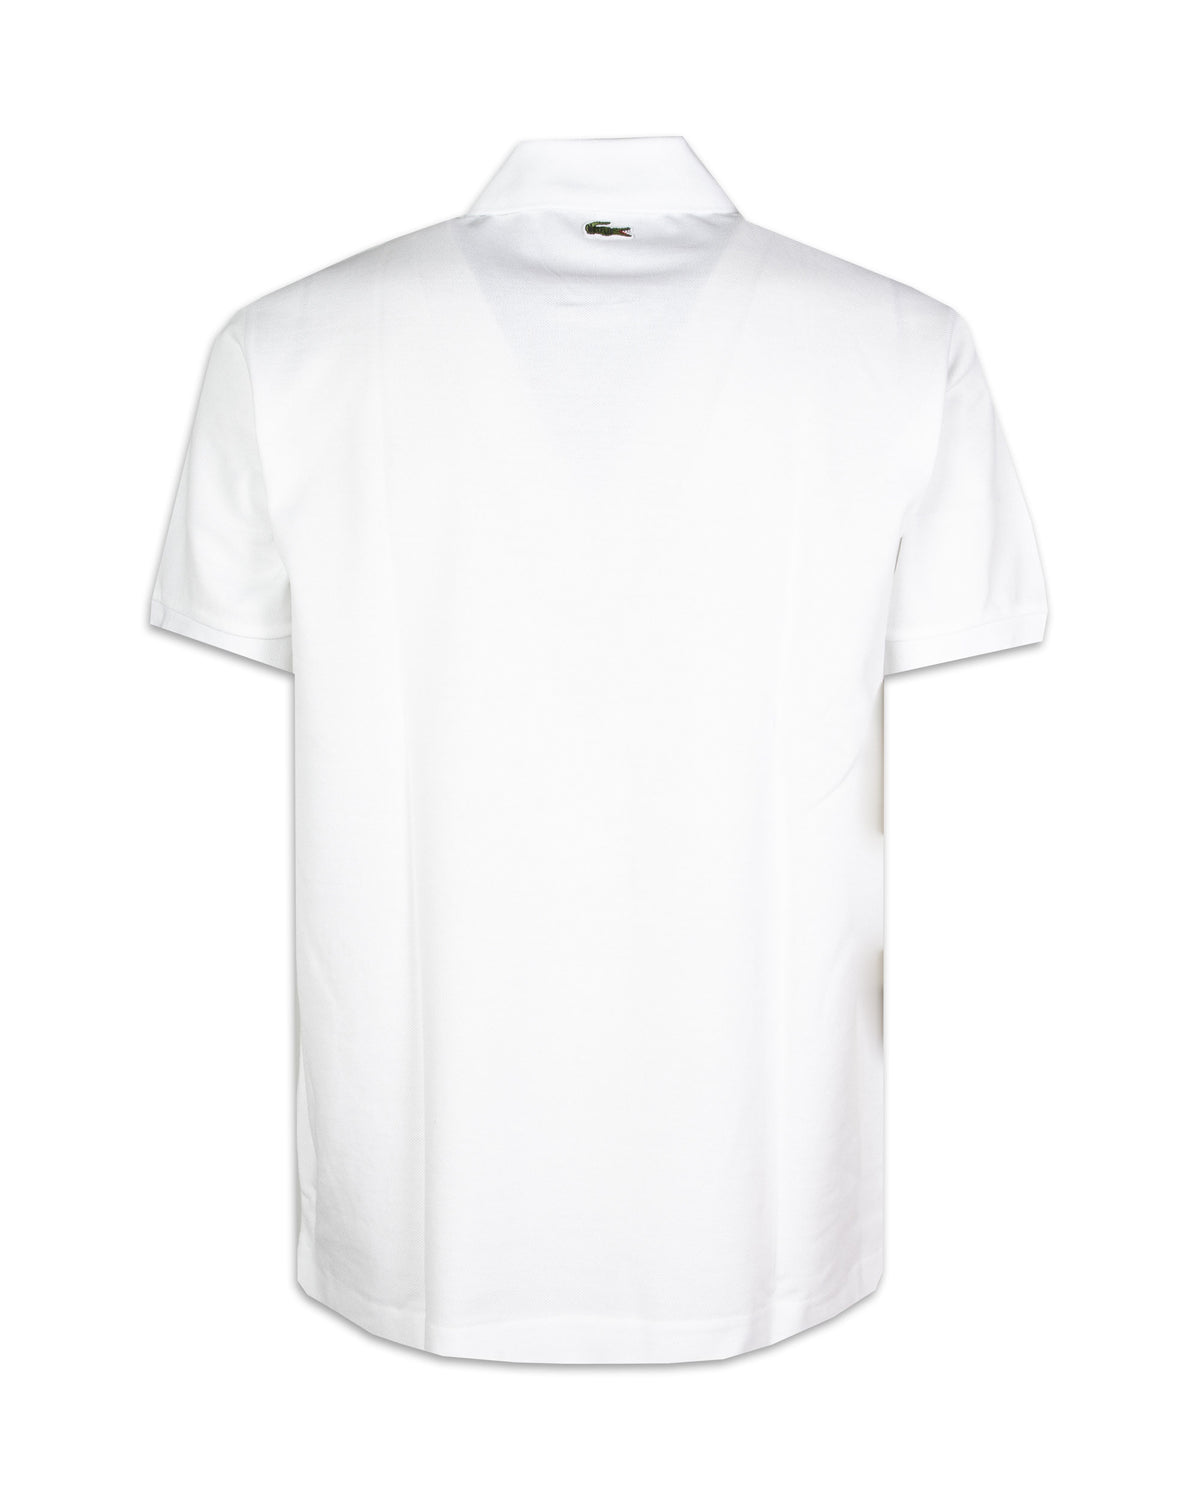 Polo Shirt Lacoste x Netflix Lupin White